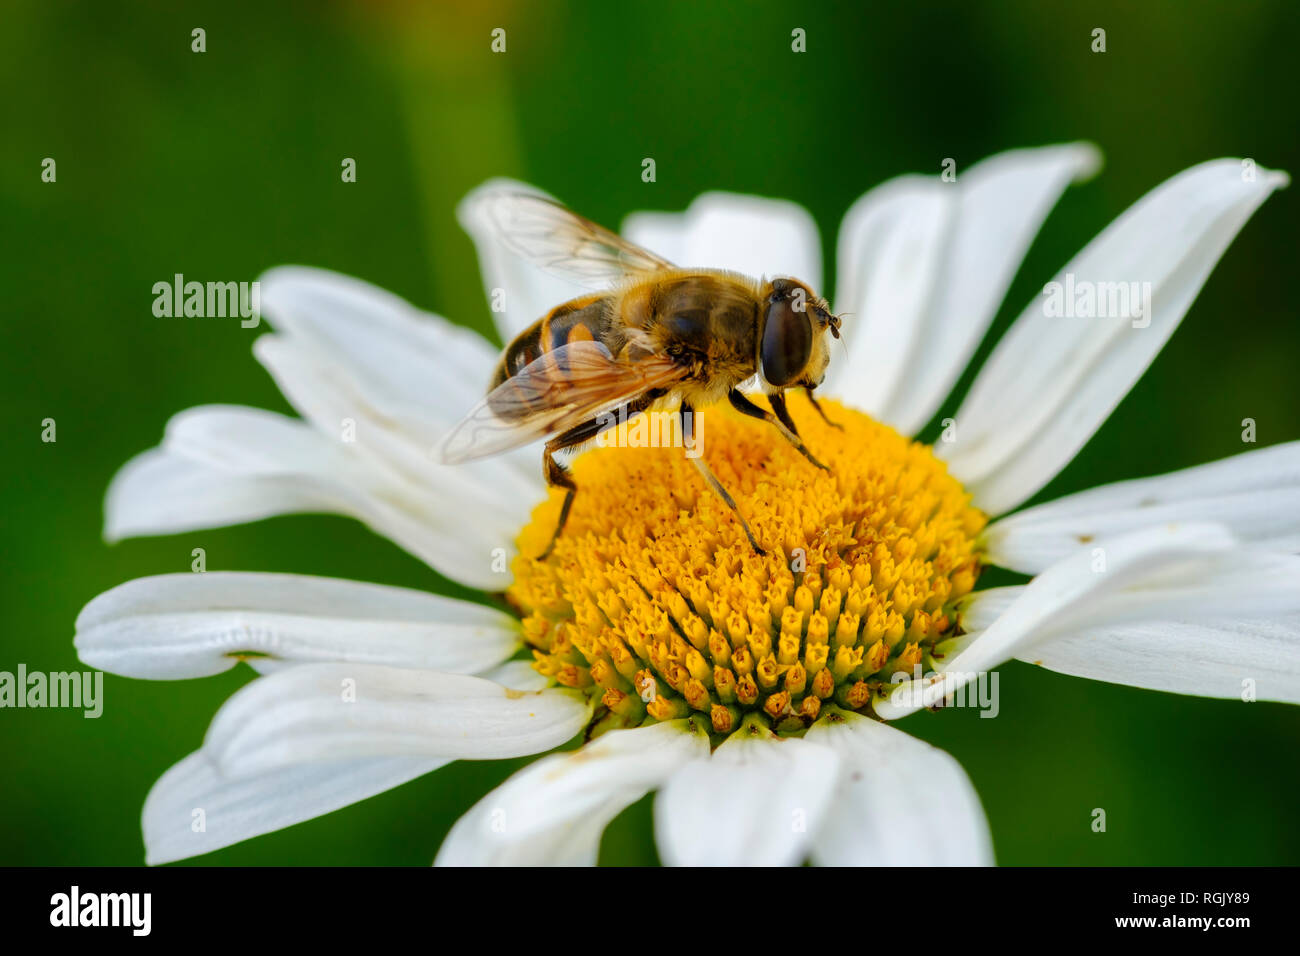 Albania, Valbona-National Park, hoverfly, Syrphus sp., on flower Stock Photo